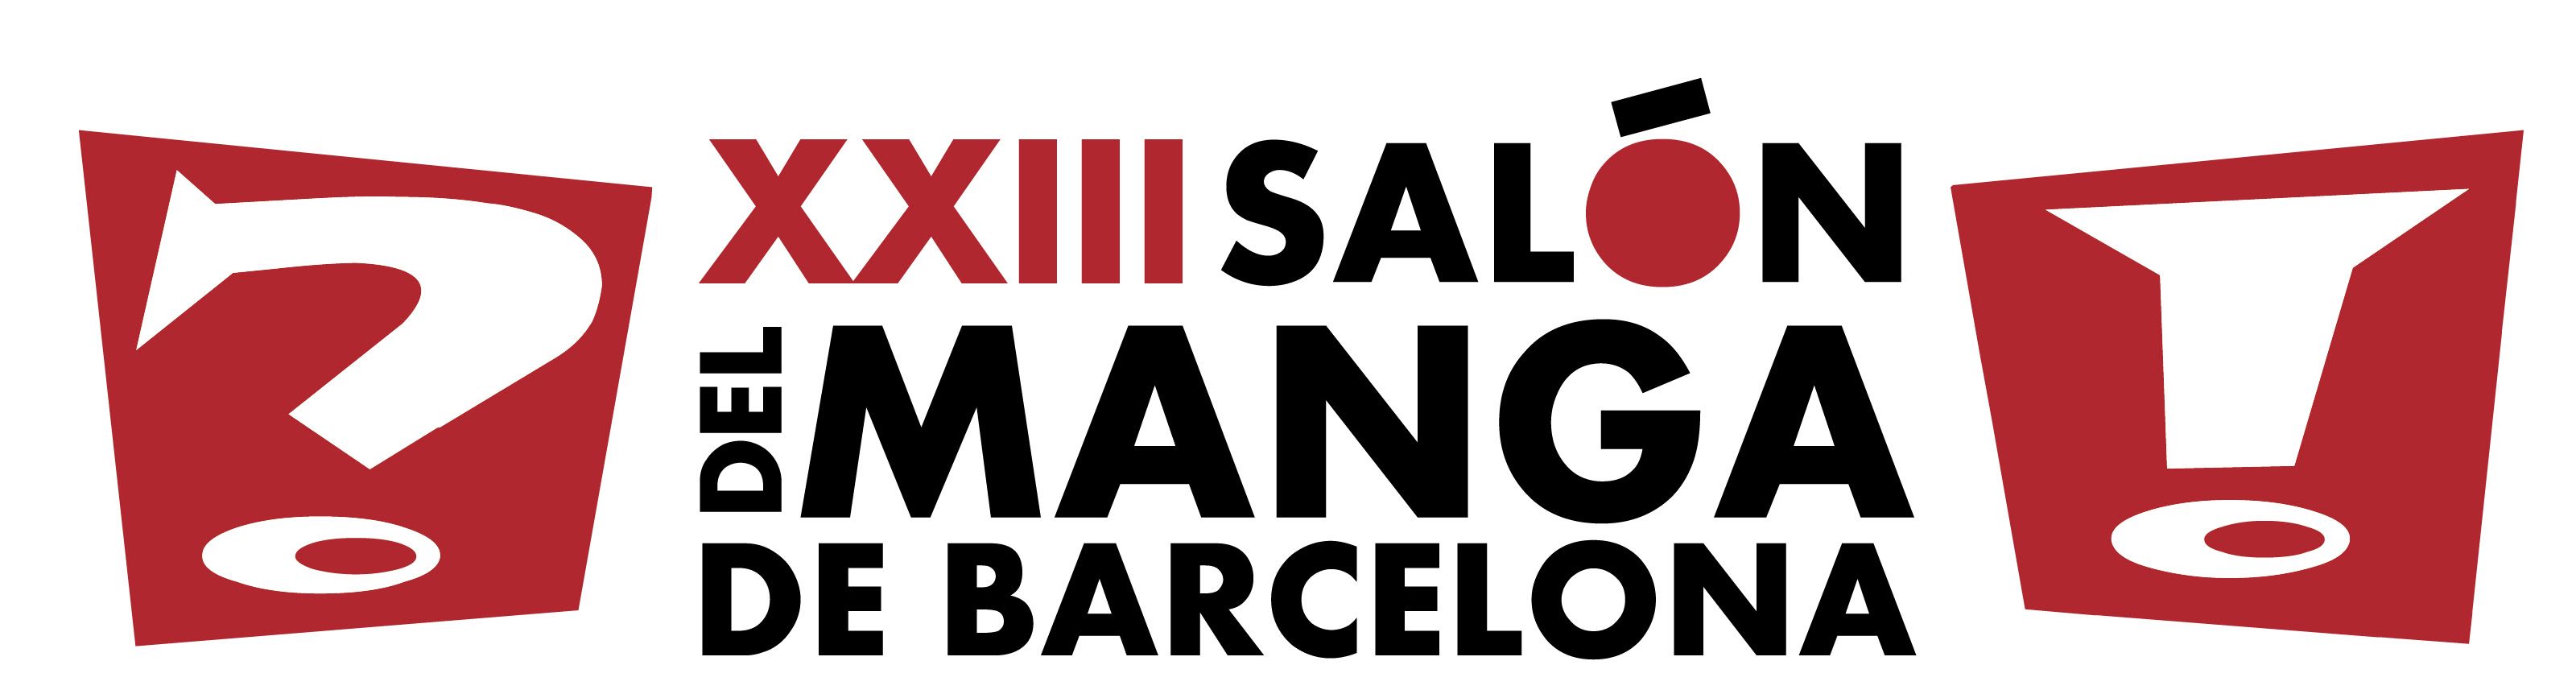 XXIII Salón del Manga de Barcelona